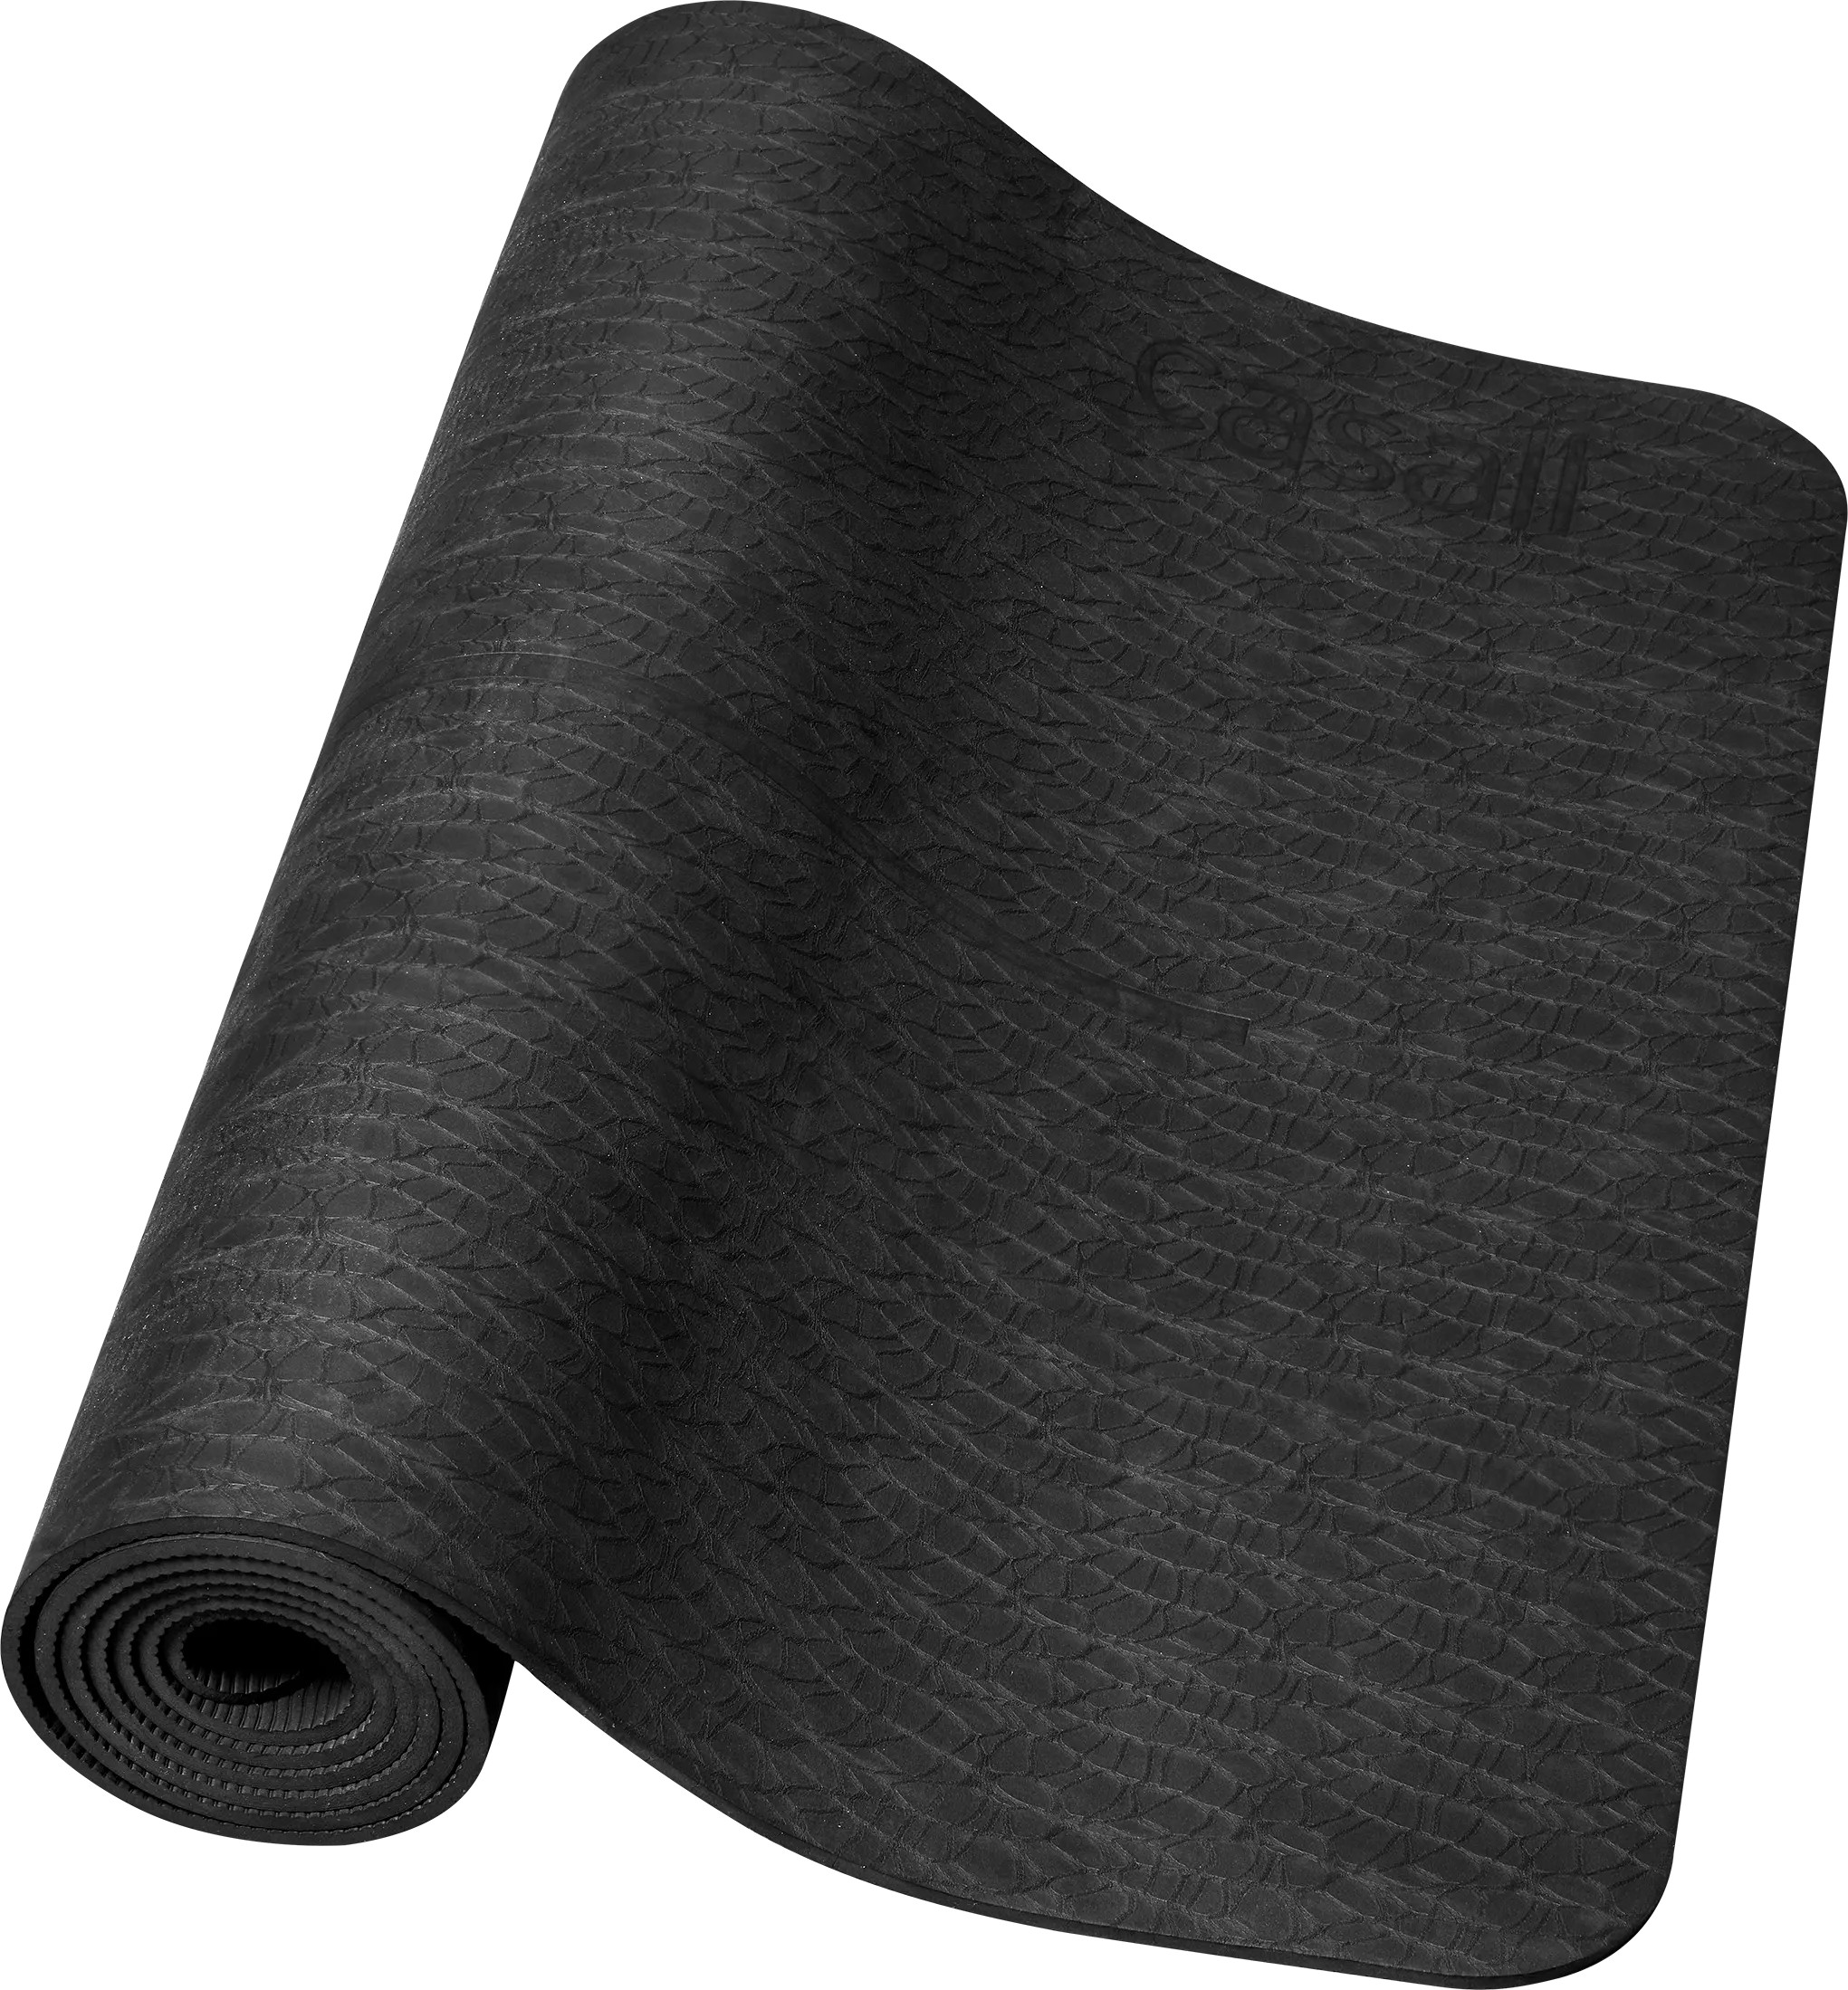 https://www.fjellsport.no/assets/blobs/casall-exercise-mat-cushion-5mm-pvc-free-black-0be025876f.jpeg